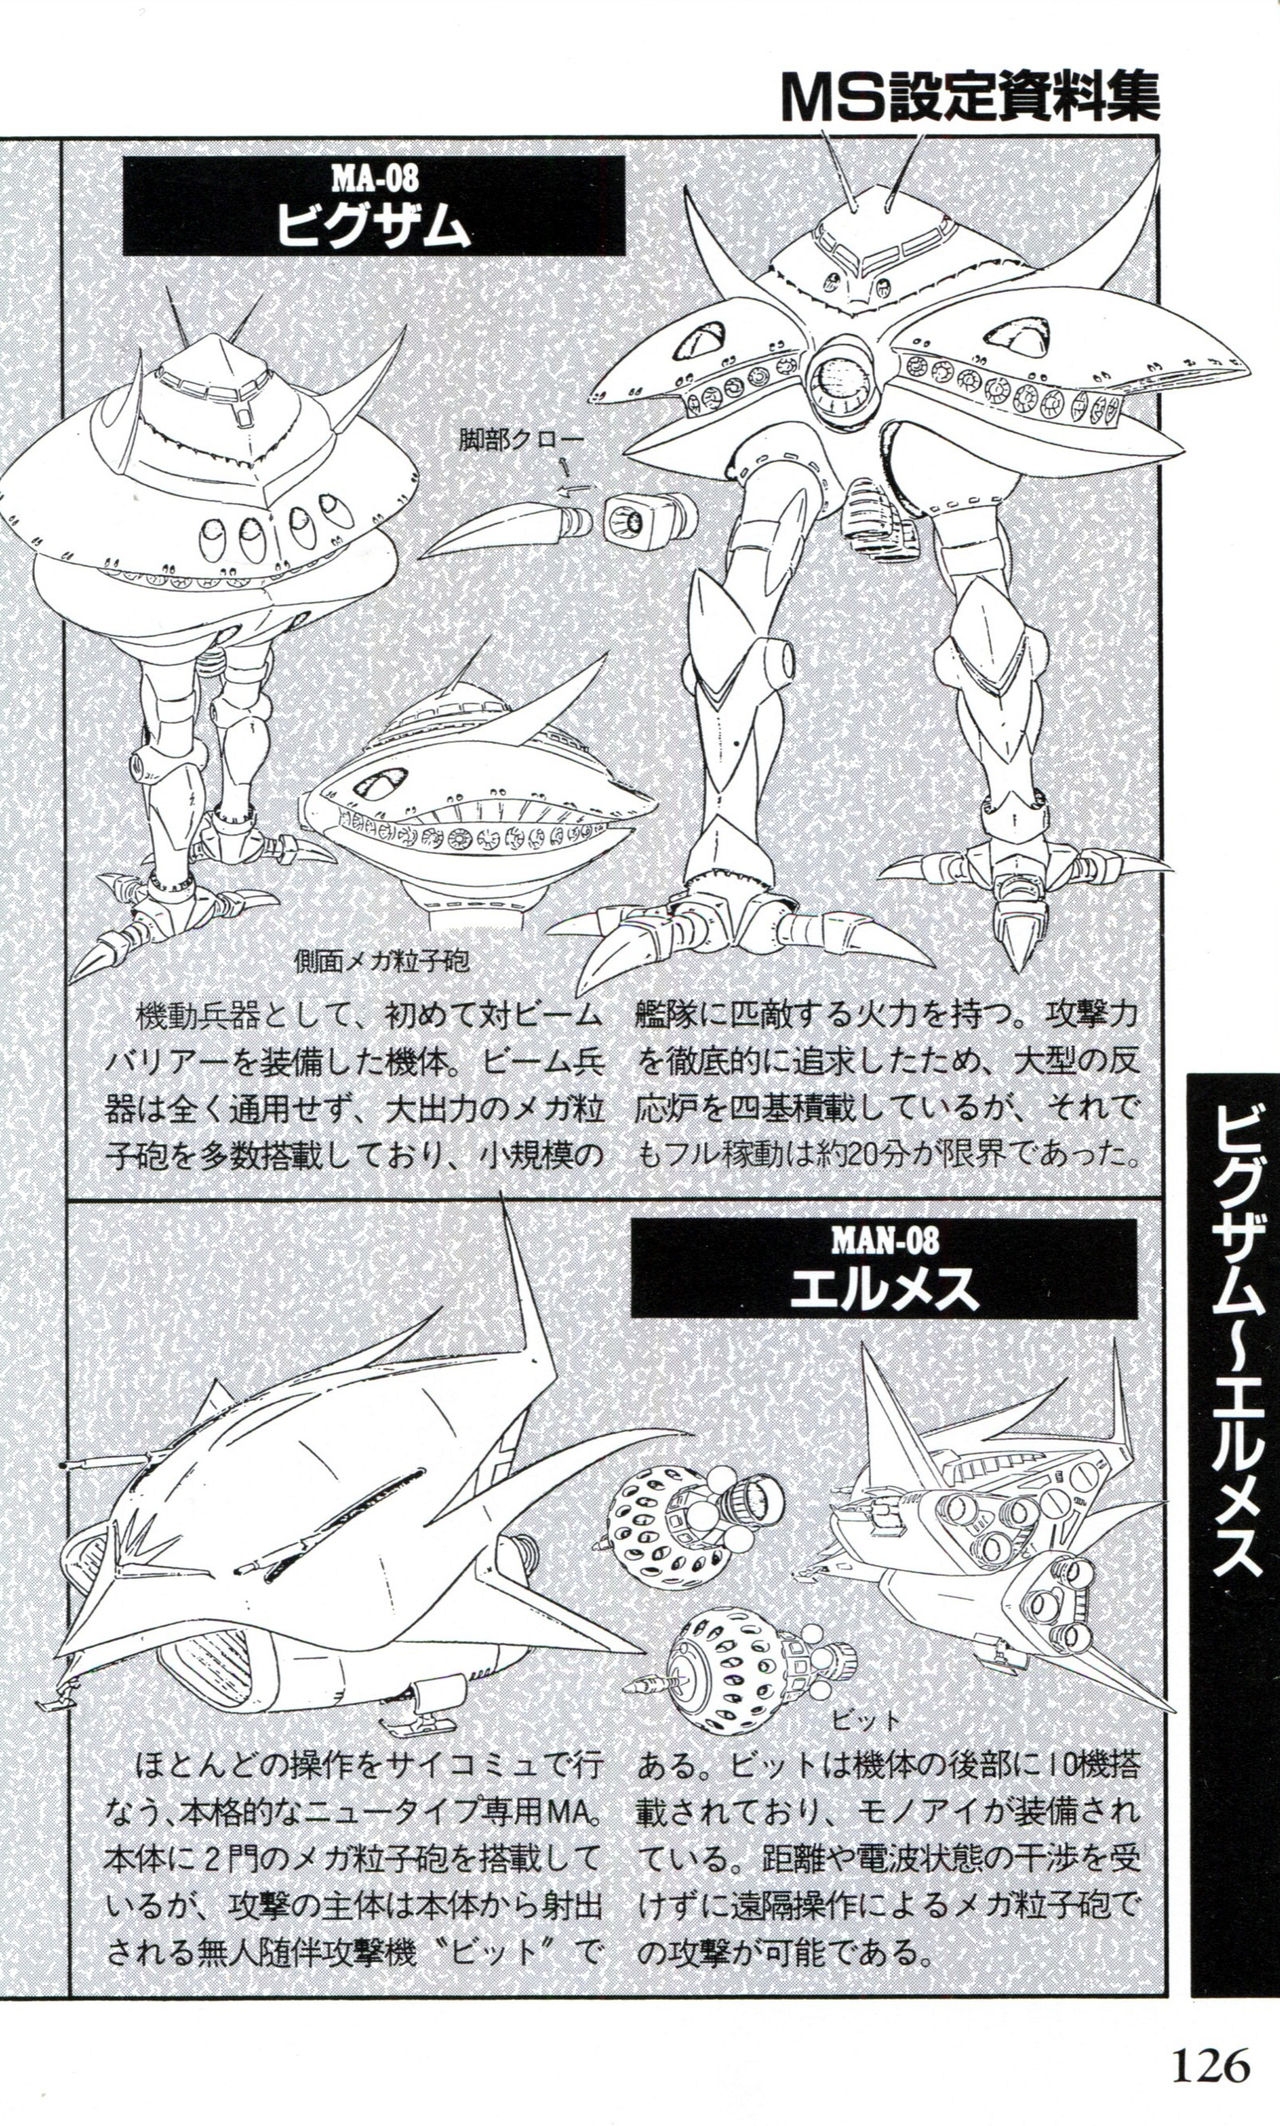 Mobile Suit Gundam U.C. Box MS Gundam Encyclopedia NO.01 - Mobile Suit Gundam 125